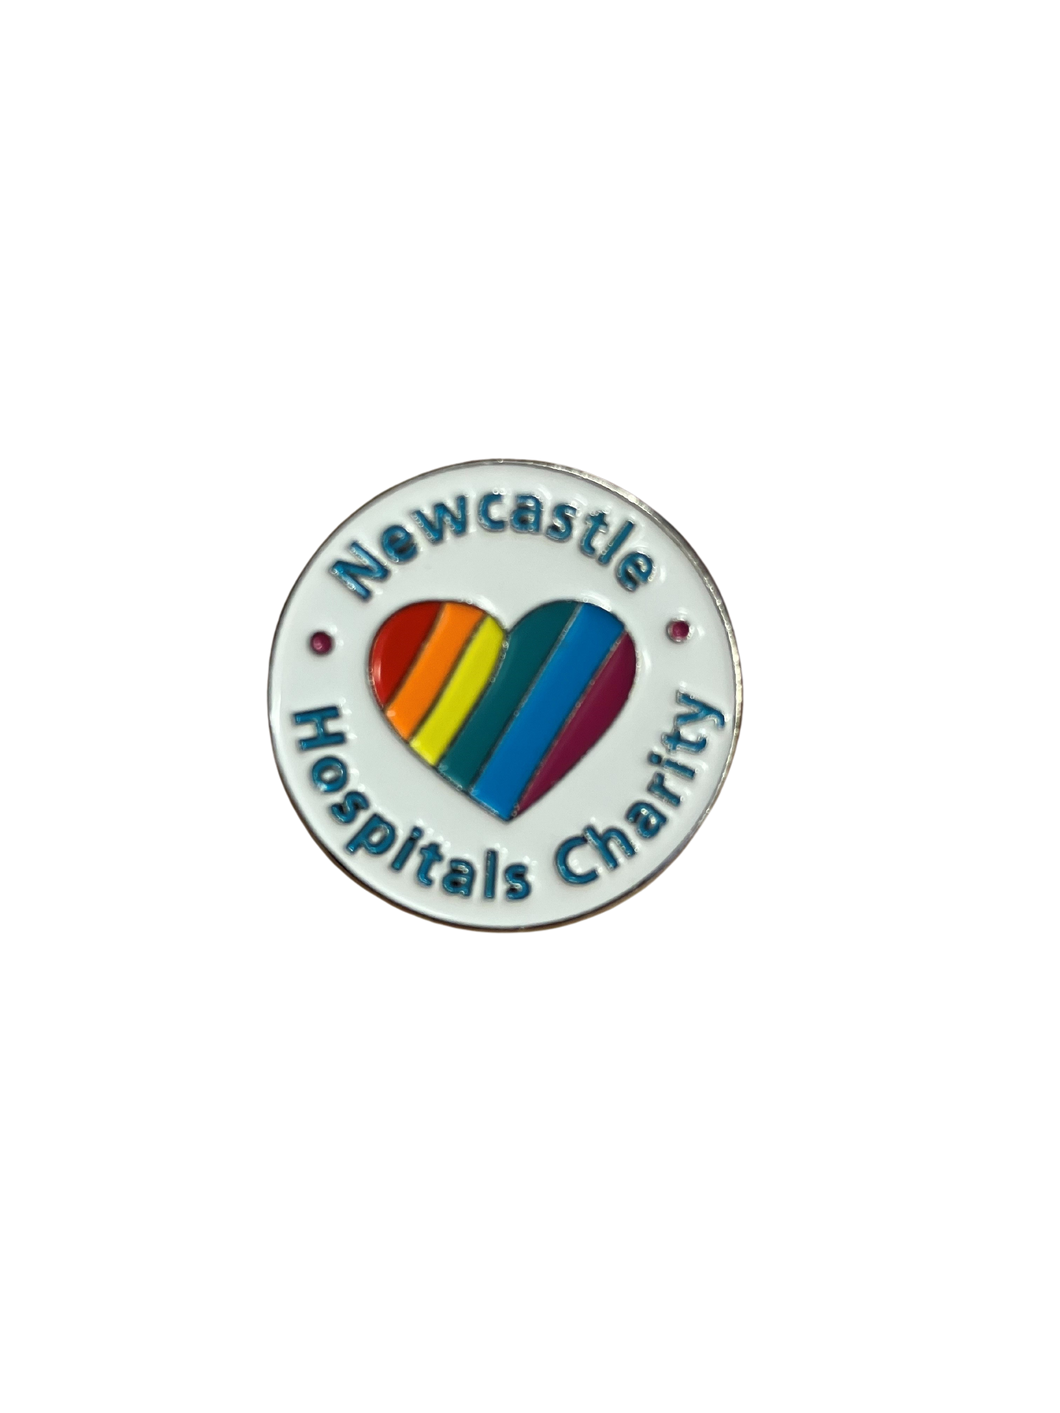 Newcastle Hospital Charity Pin Badge